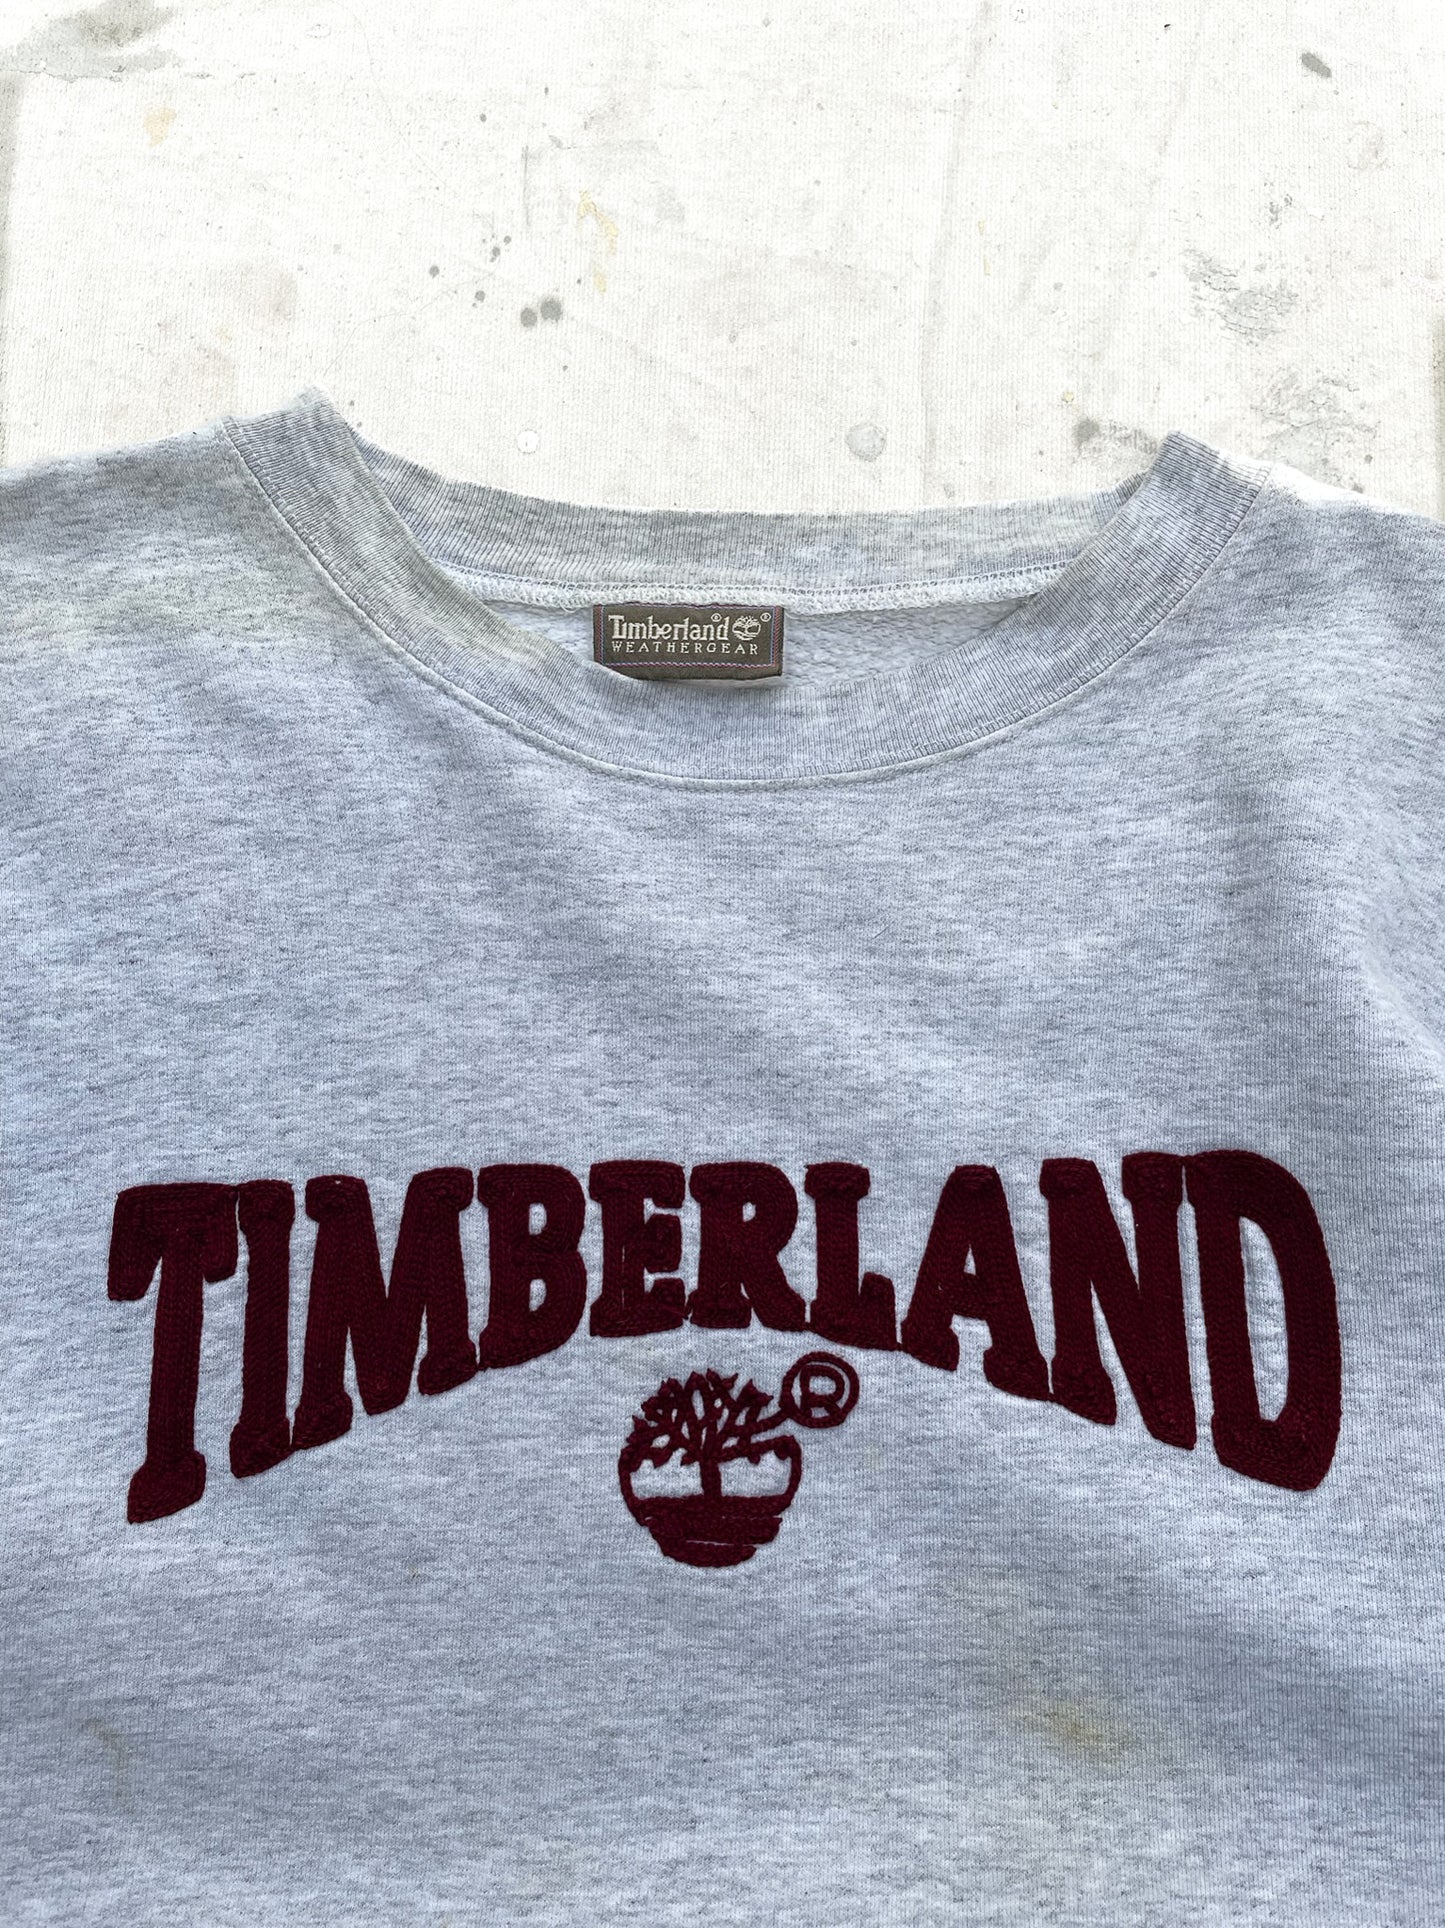 Timberland Chainstitch Spellout Crewneck—[XL]